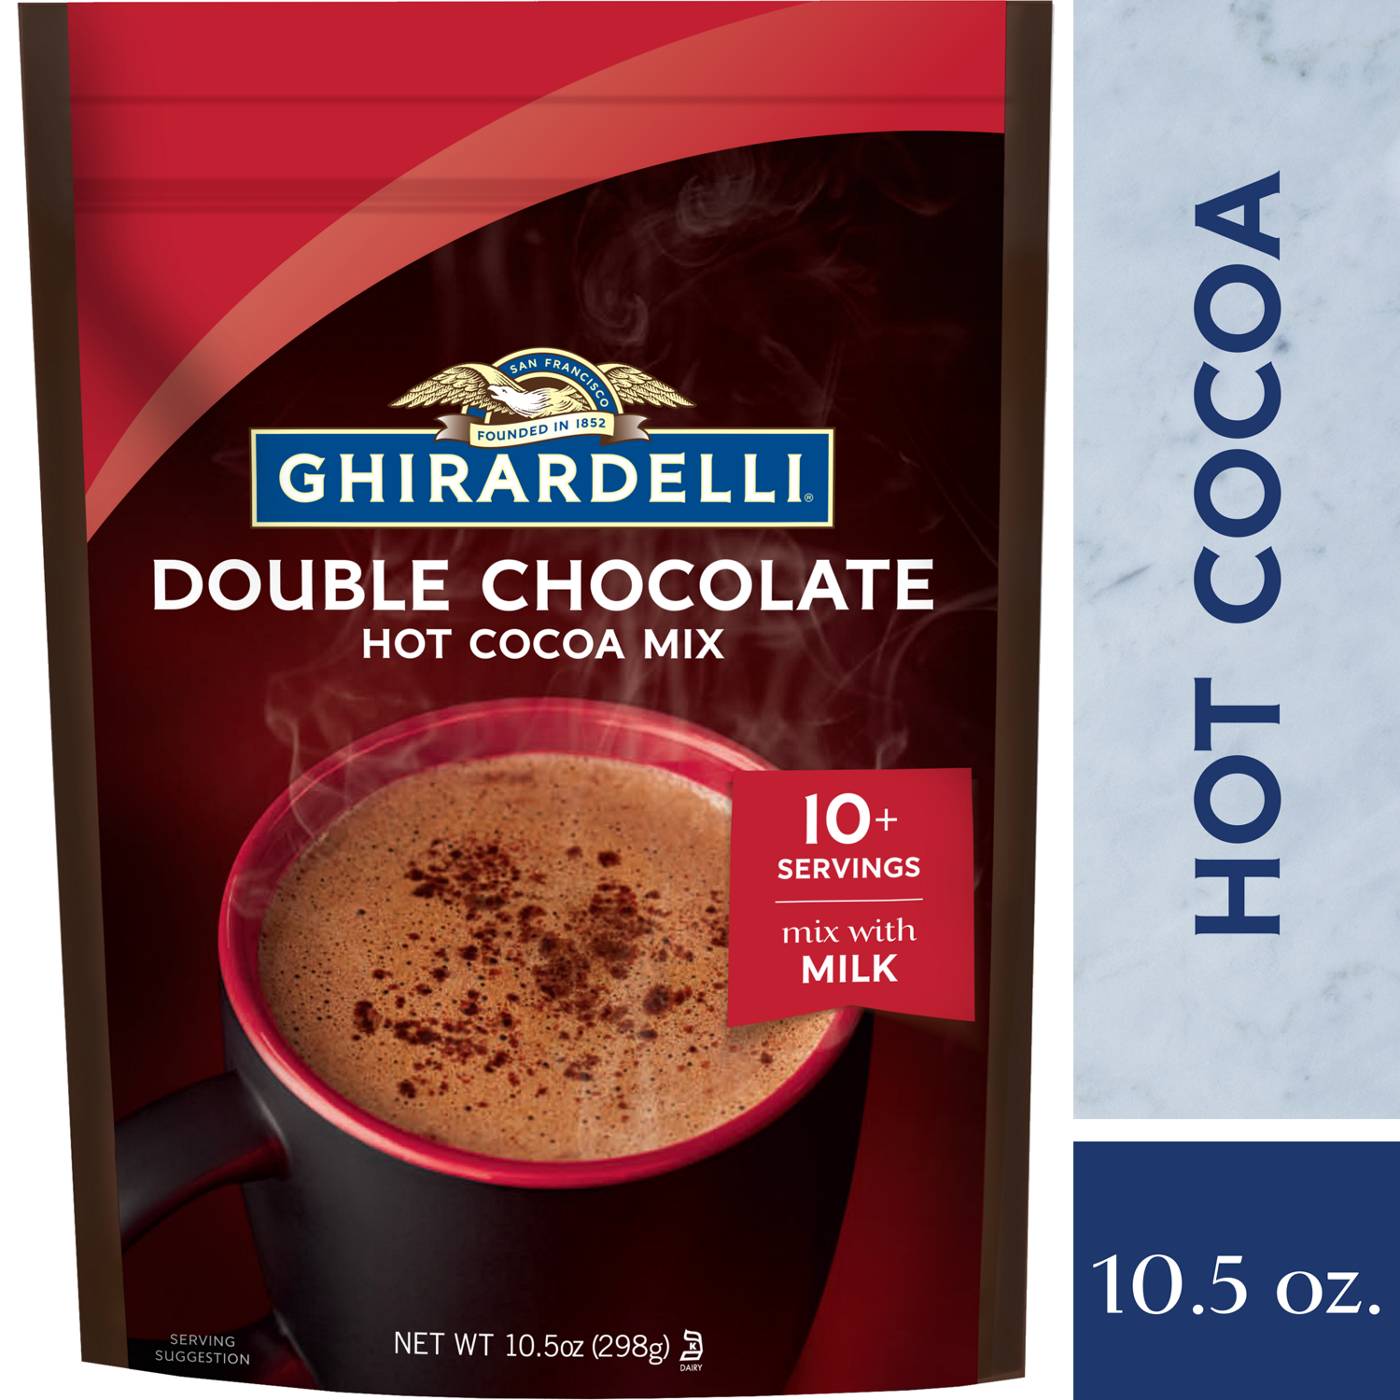 Ghirardelli Double Chocolate Premium Hot Cocoa Mix; image 6 of 7